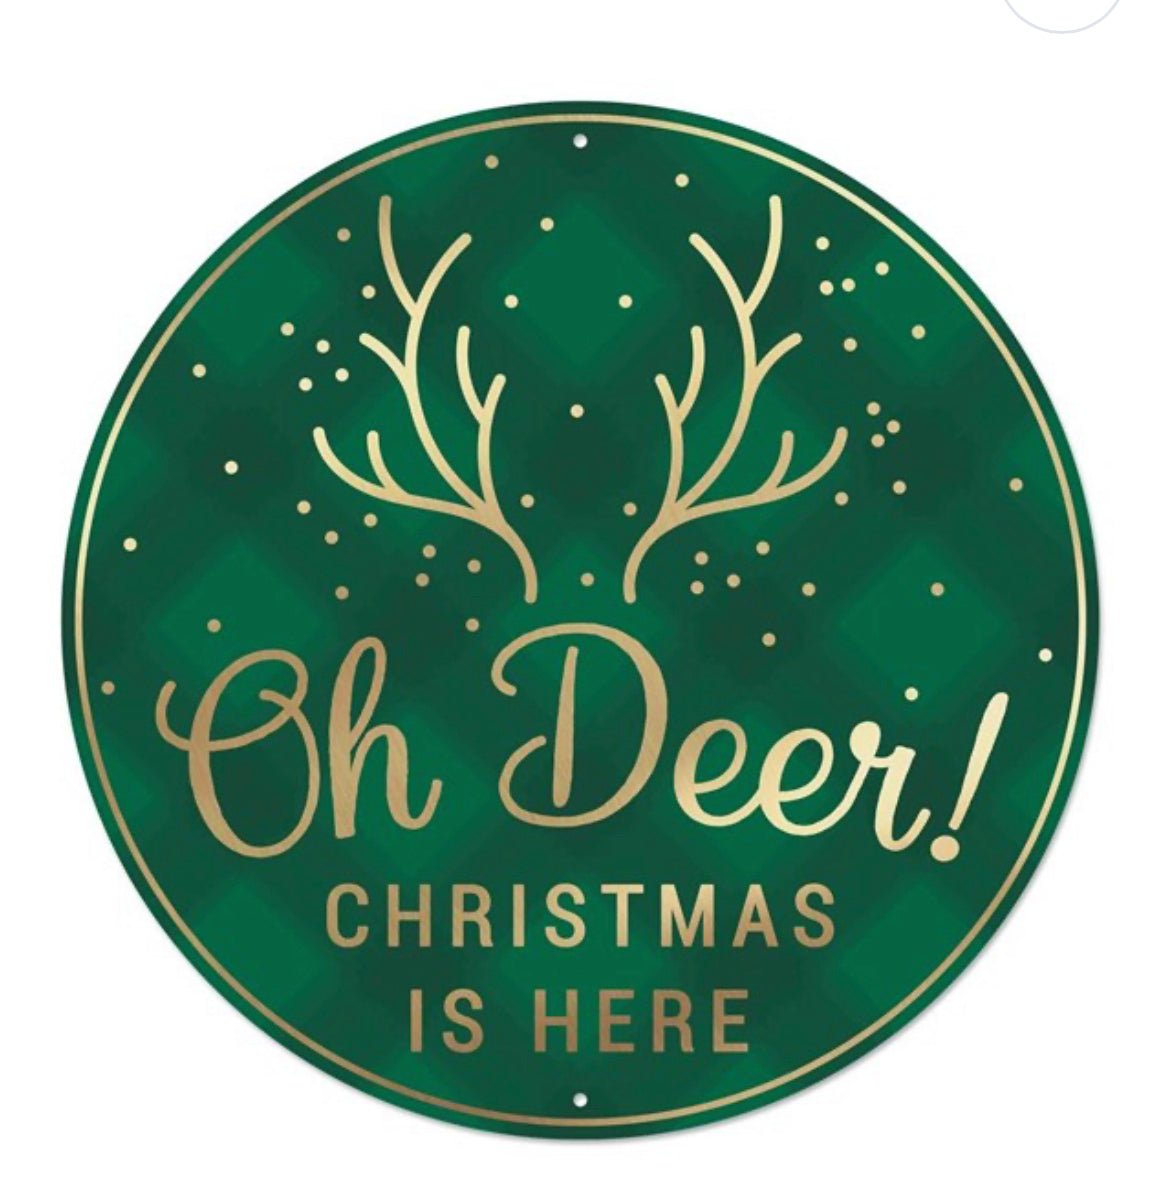 Oh deer metal round sign - Greenery MarketSeasonal & Holiday DecorationsMD074806